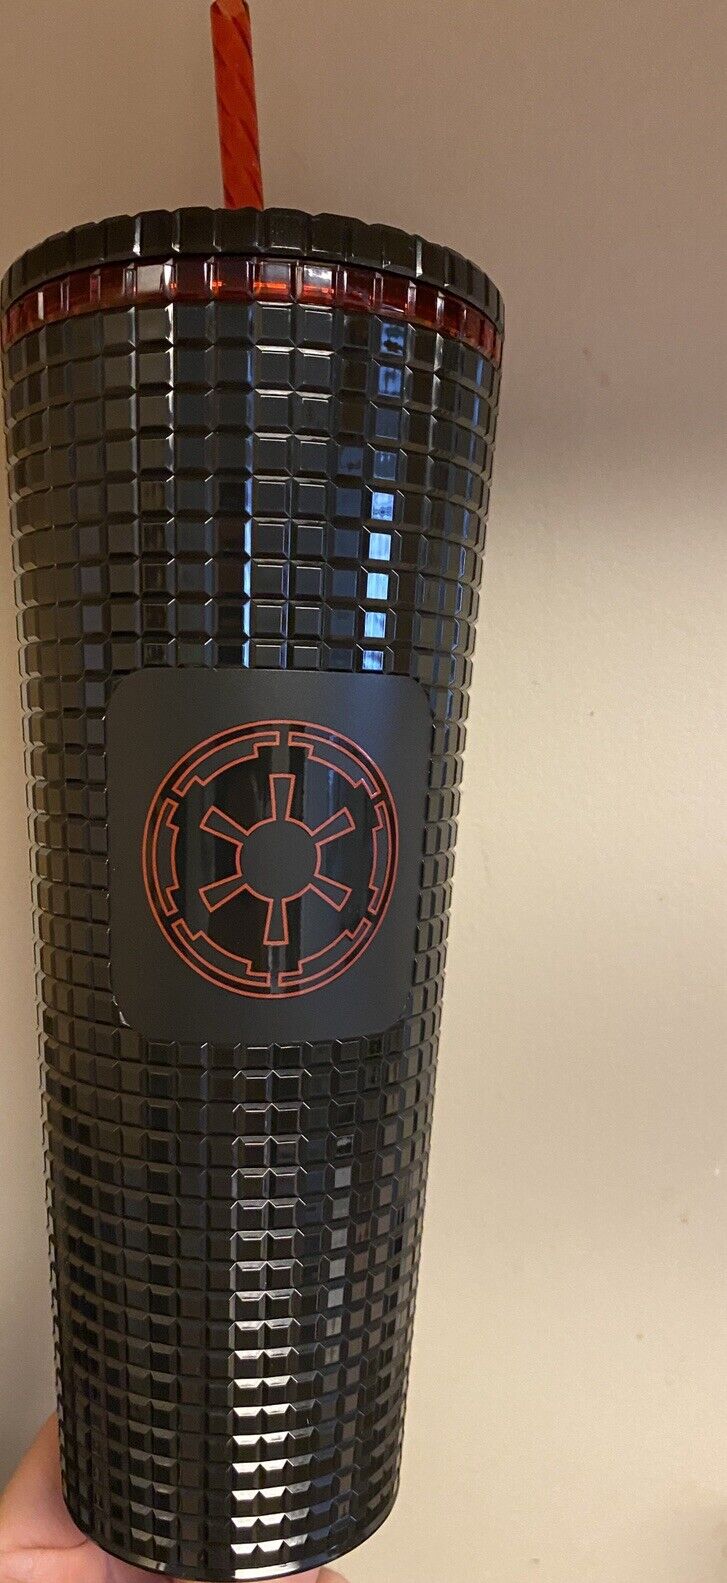 NEW Disney Star Wars Galactic Empire Starbucks Tumbler with Straw Black 24 Oz